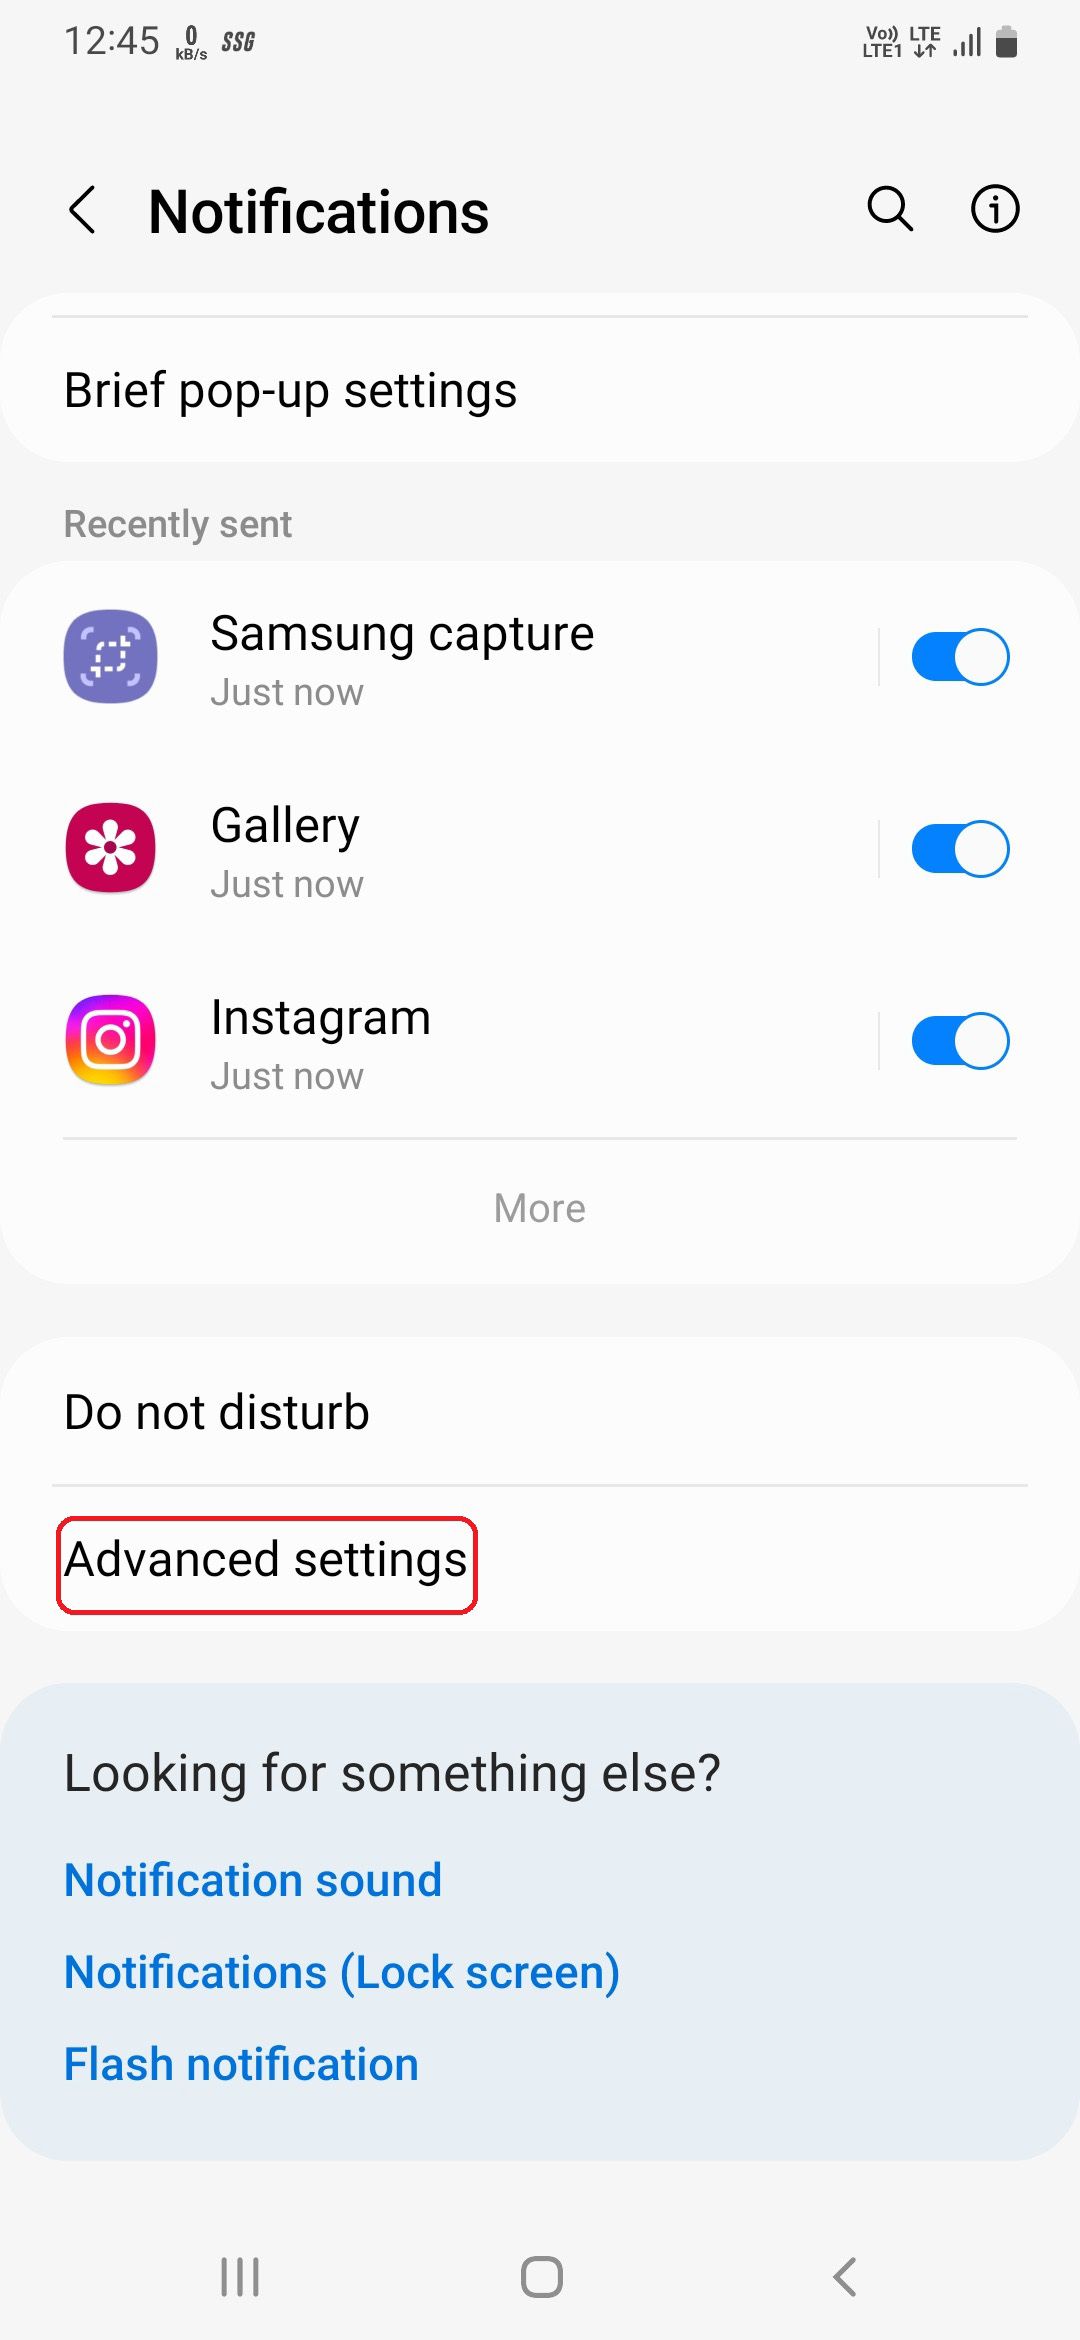 Advanced settings in the notifications menu